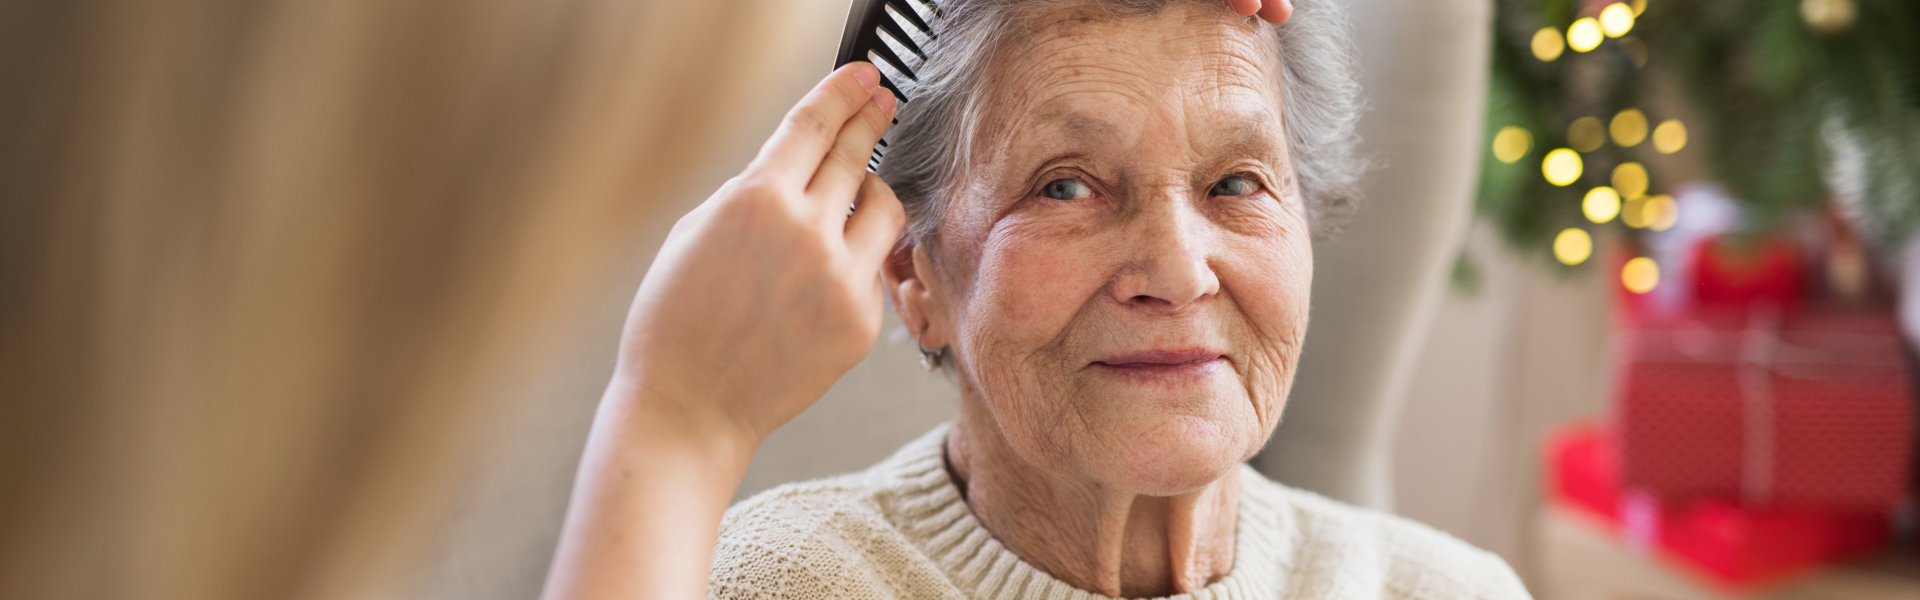 caregiver comb her patient's hair